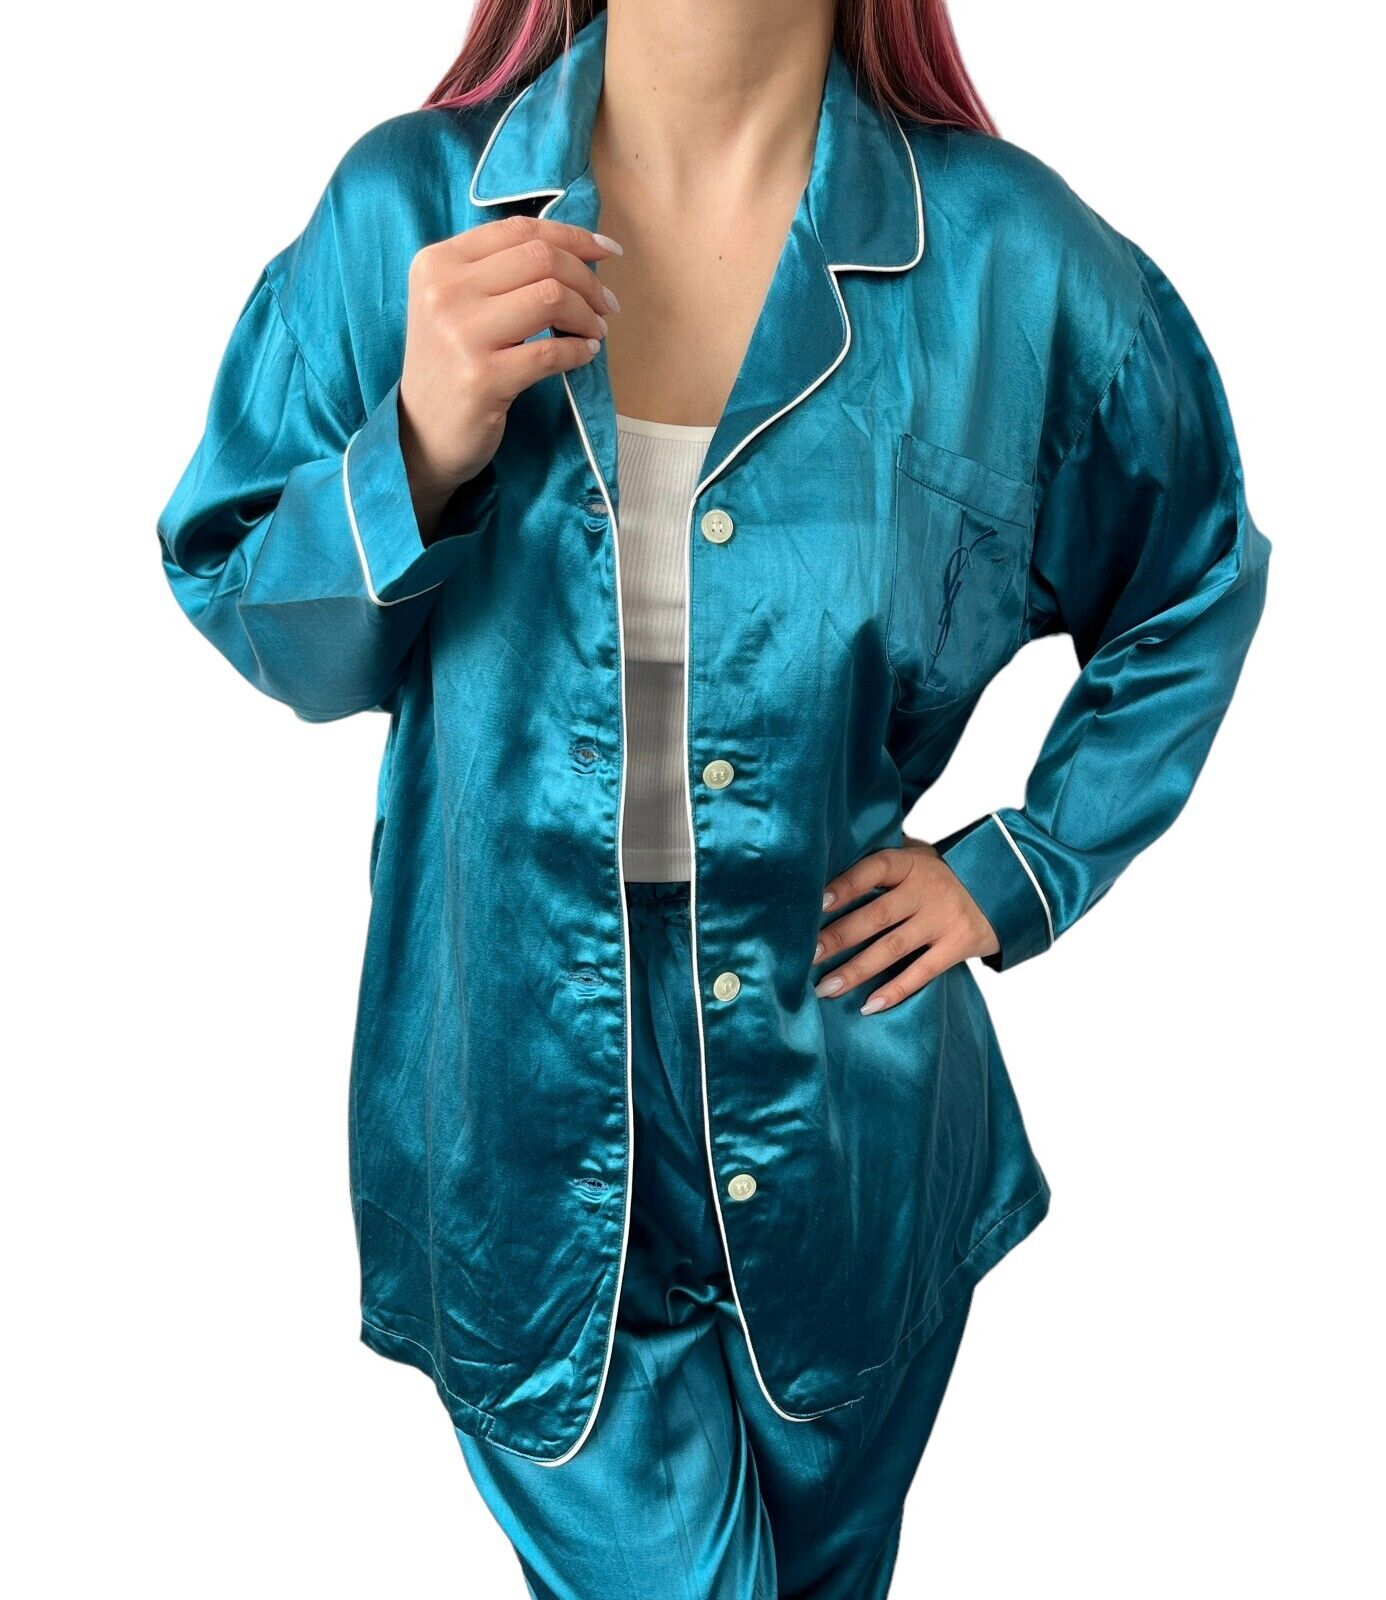 Yves Saint Laurent Vintage Logo Pajama #M Room Wear Blue Silk Satin RankAB